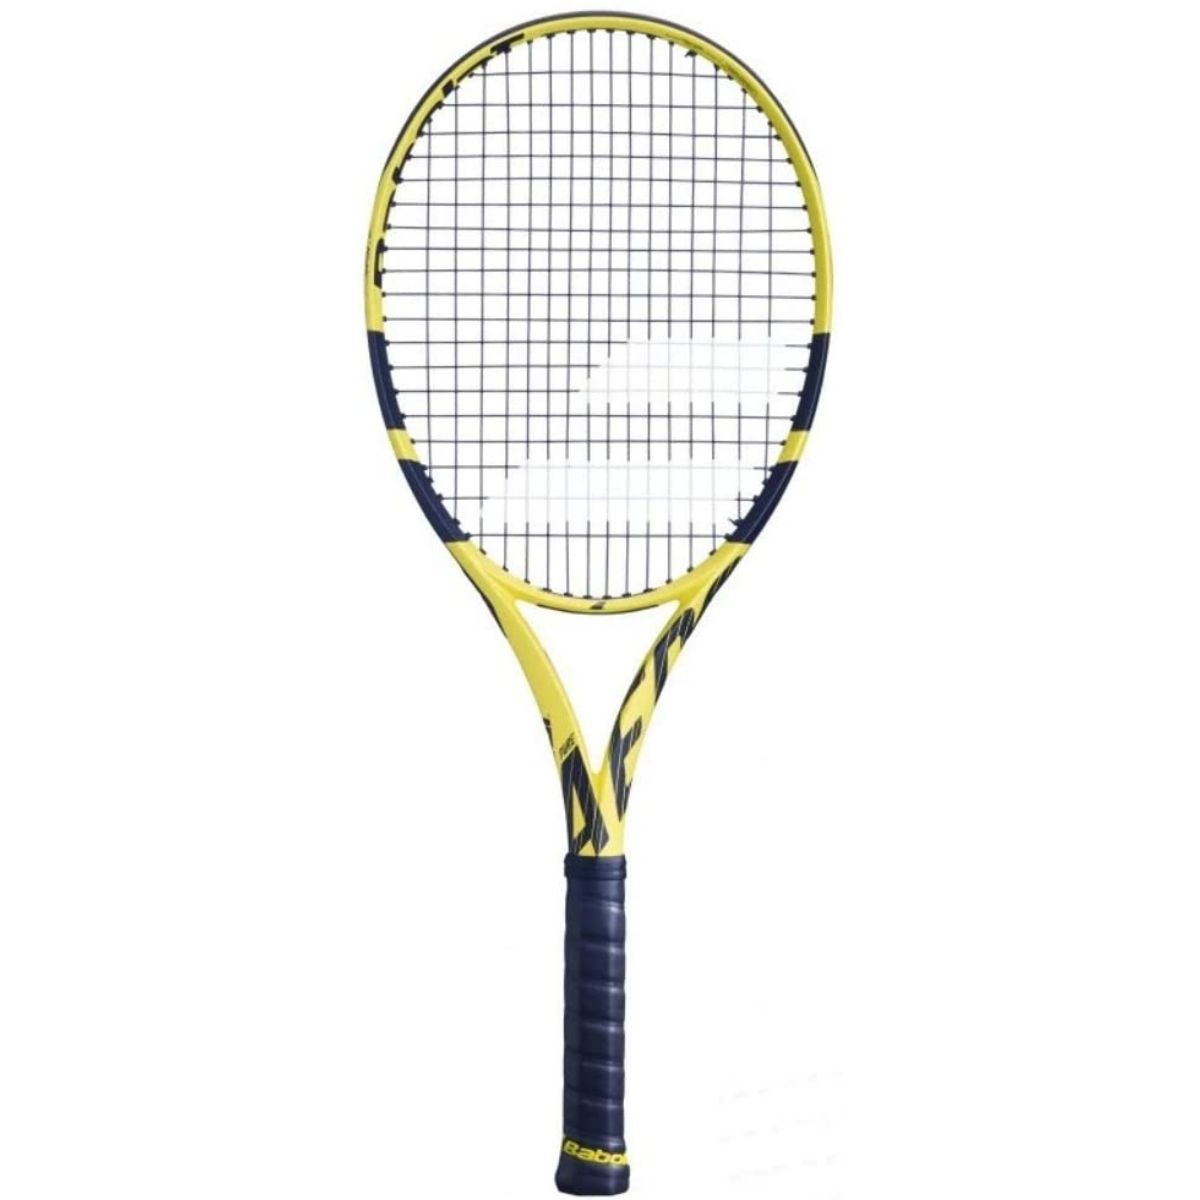 The Best Tennis Rackets Options: Babolat Pure Aero 